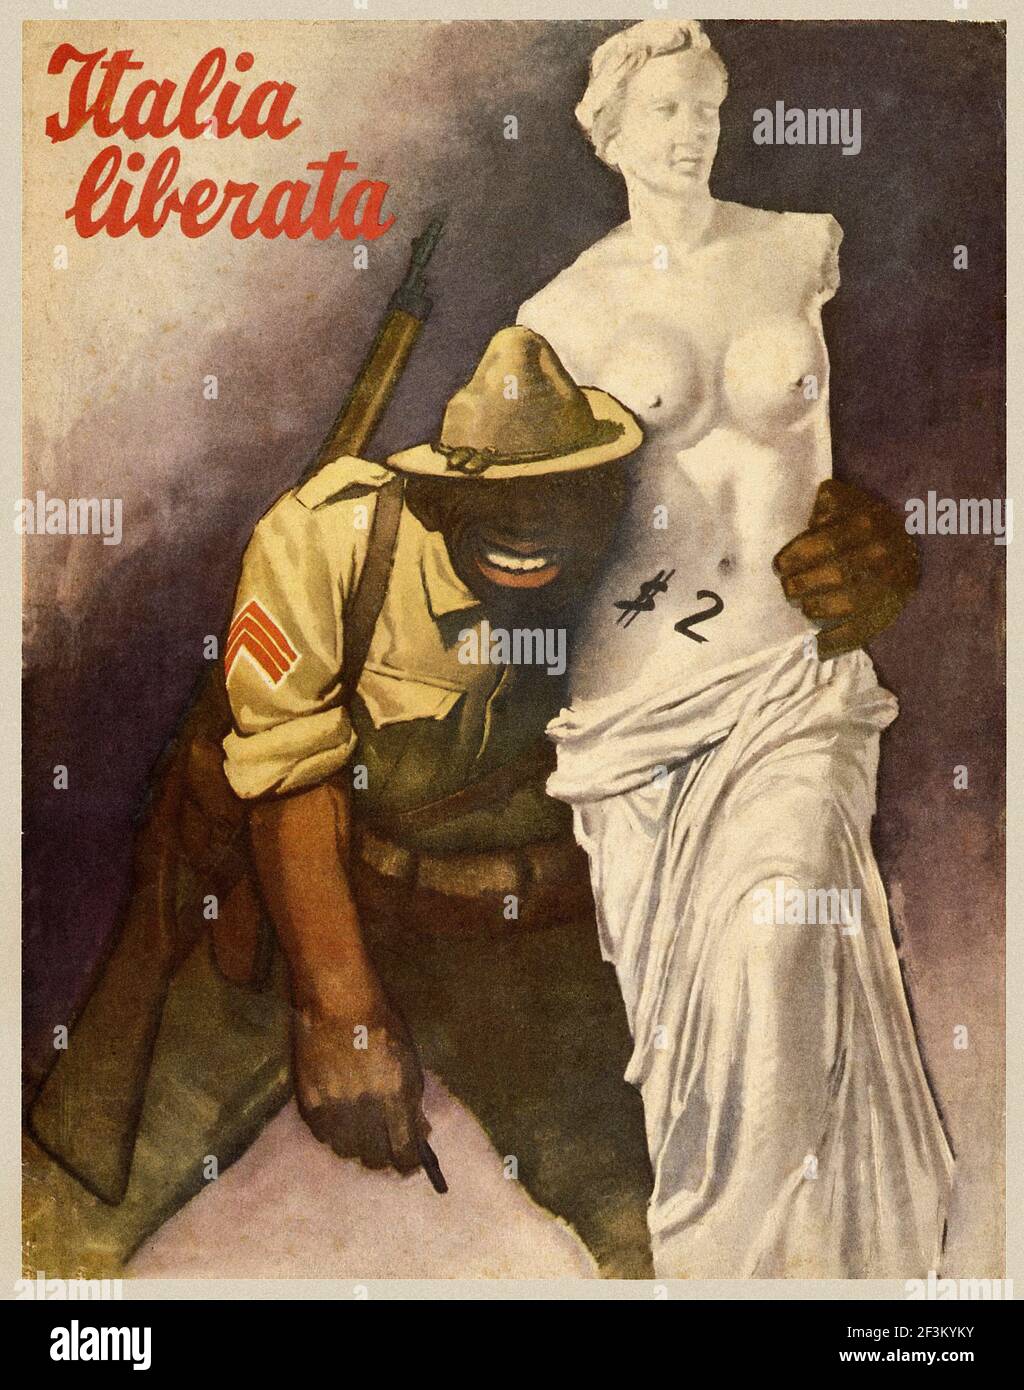 Cartel de propaganda antiestadounidense italiano. ¡Italia liberada! Italia, 1944 Foto de stock